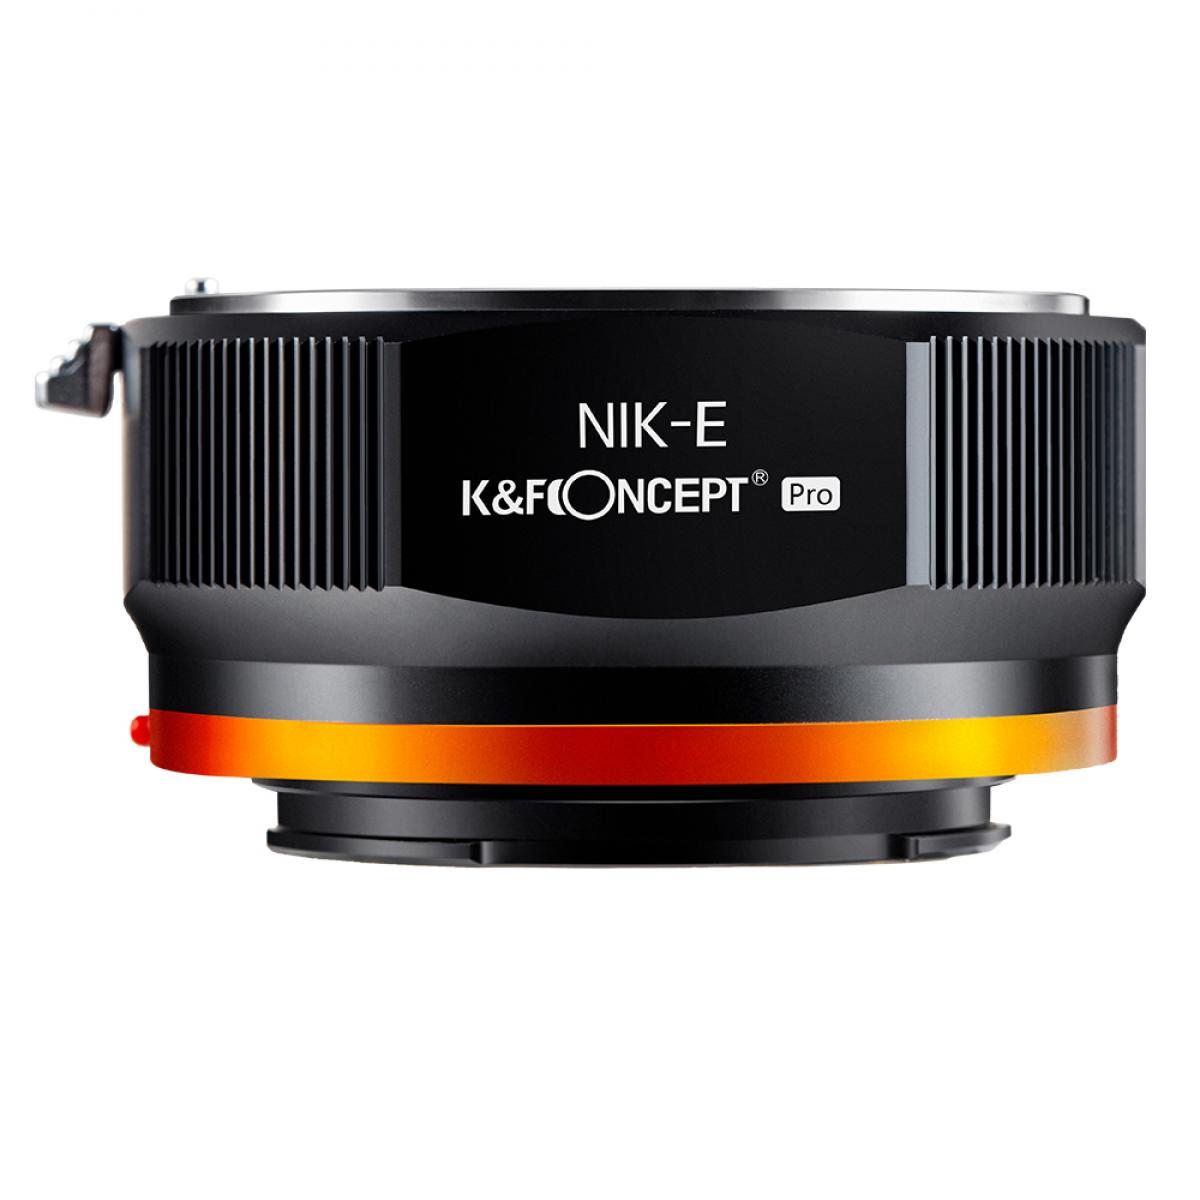 Lens Mount Adapter Ring,Professional PK-AI Metal Lens Adapter Ring for PK Mount Lens to Fit for Nikon AI Camera,Manual Control Focus/Exposure,Infinity Focus